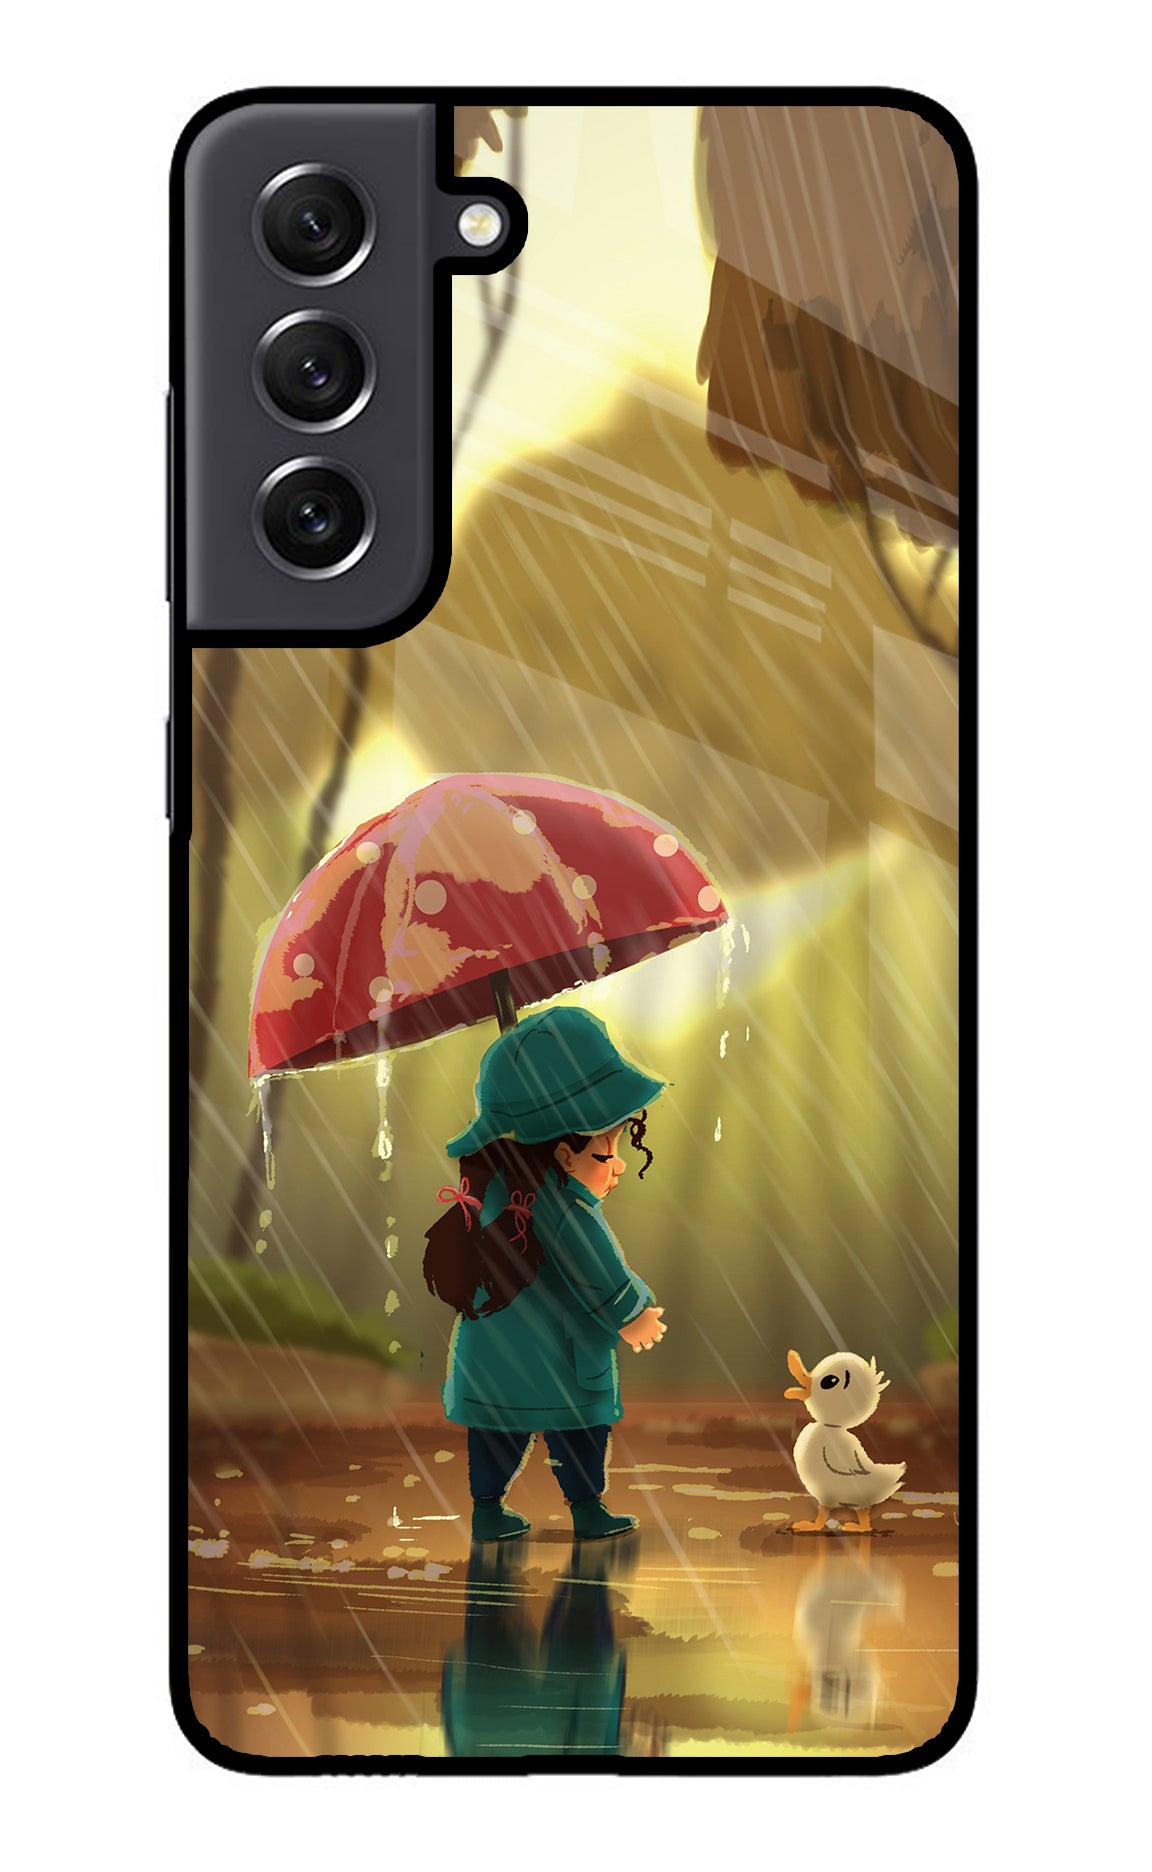 Rainy Day Samsung S21 FE 5G Back Cover